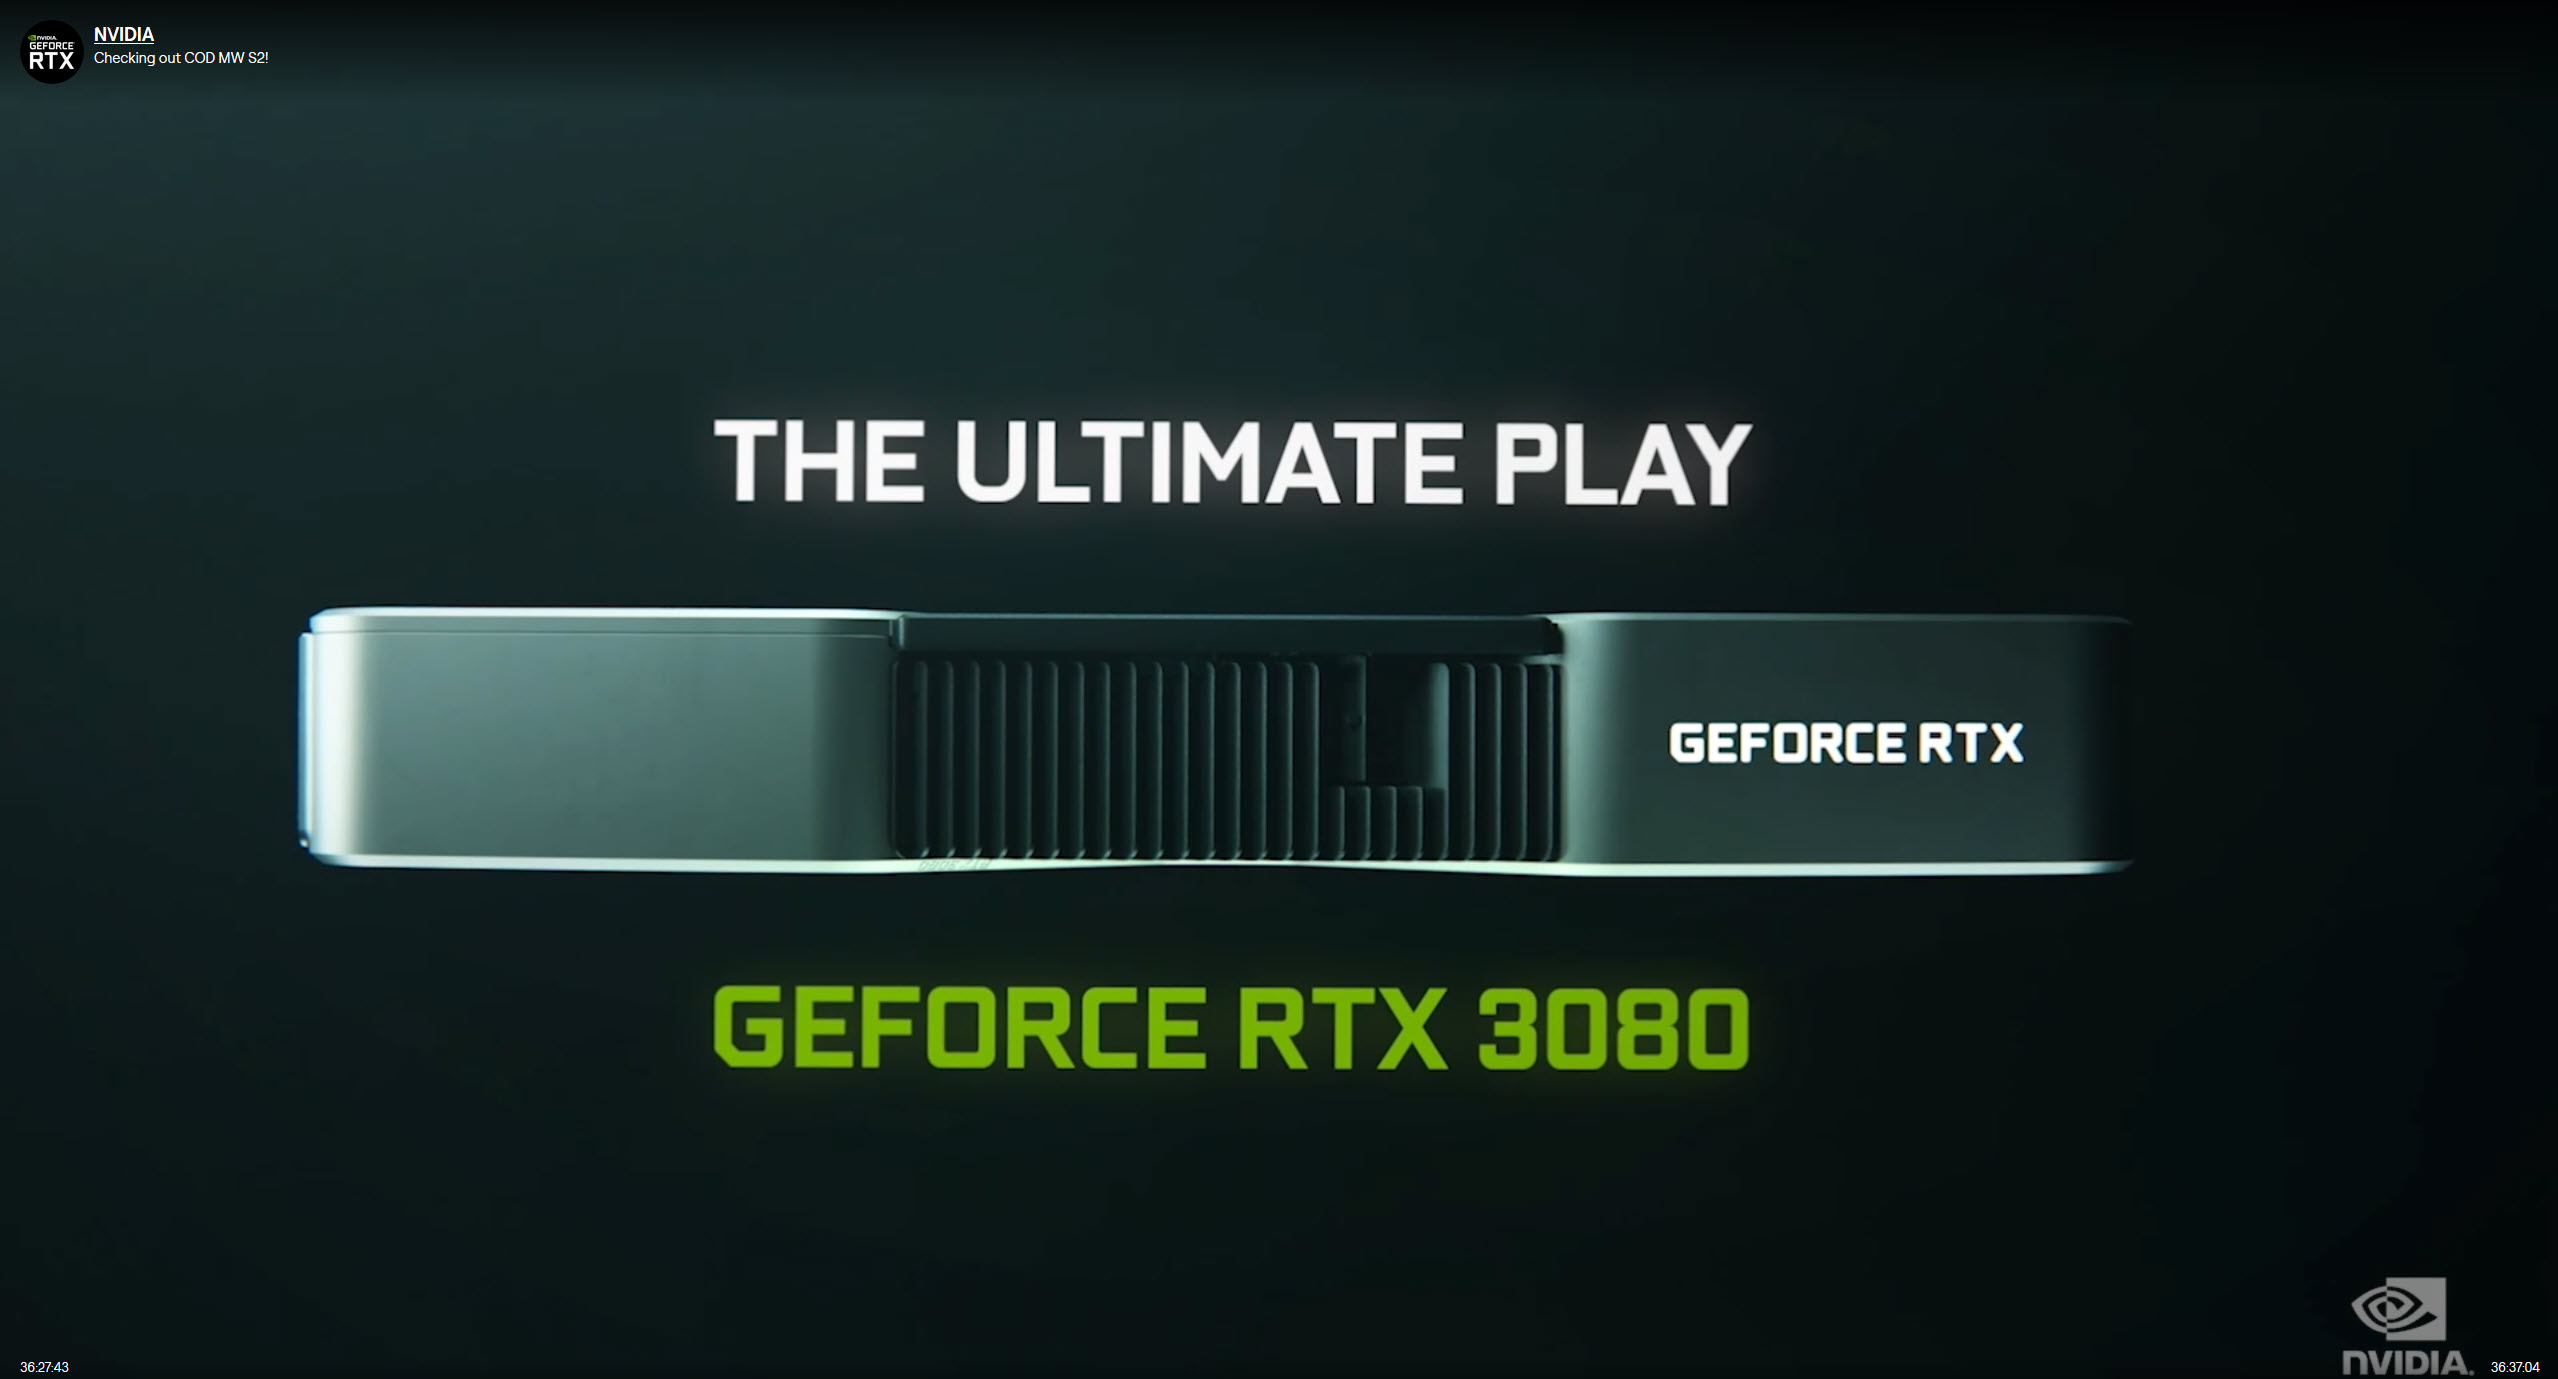 2020 09 01 23 47 10 Nvidia ประกาศเปิดตัวการ์ดจอ Nvidia GeForce RTX 30ซีรี่ย์รุ่นใหม่ล่าสุดสถาปัตย์ Ampere อย่างเป็นทางการ 